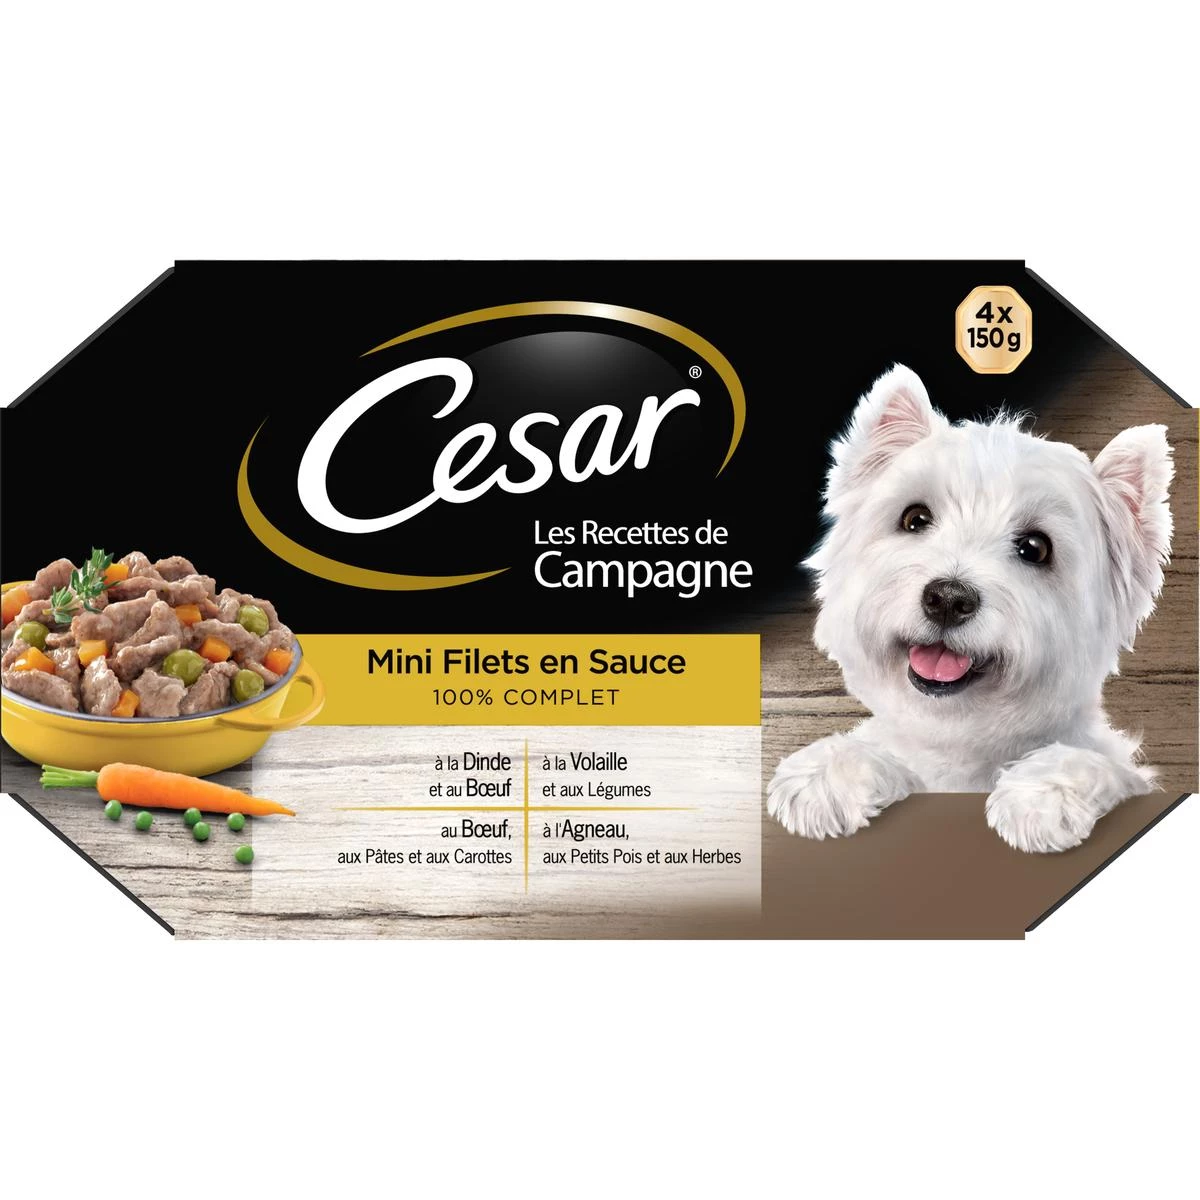 Mini Filet In Sauce for dogs 4x150g - CÉSAR